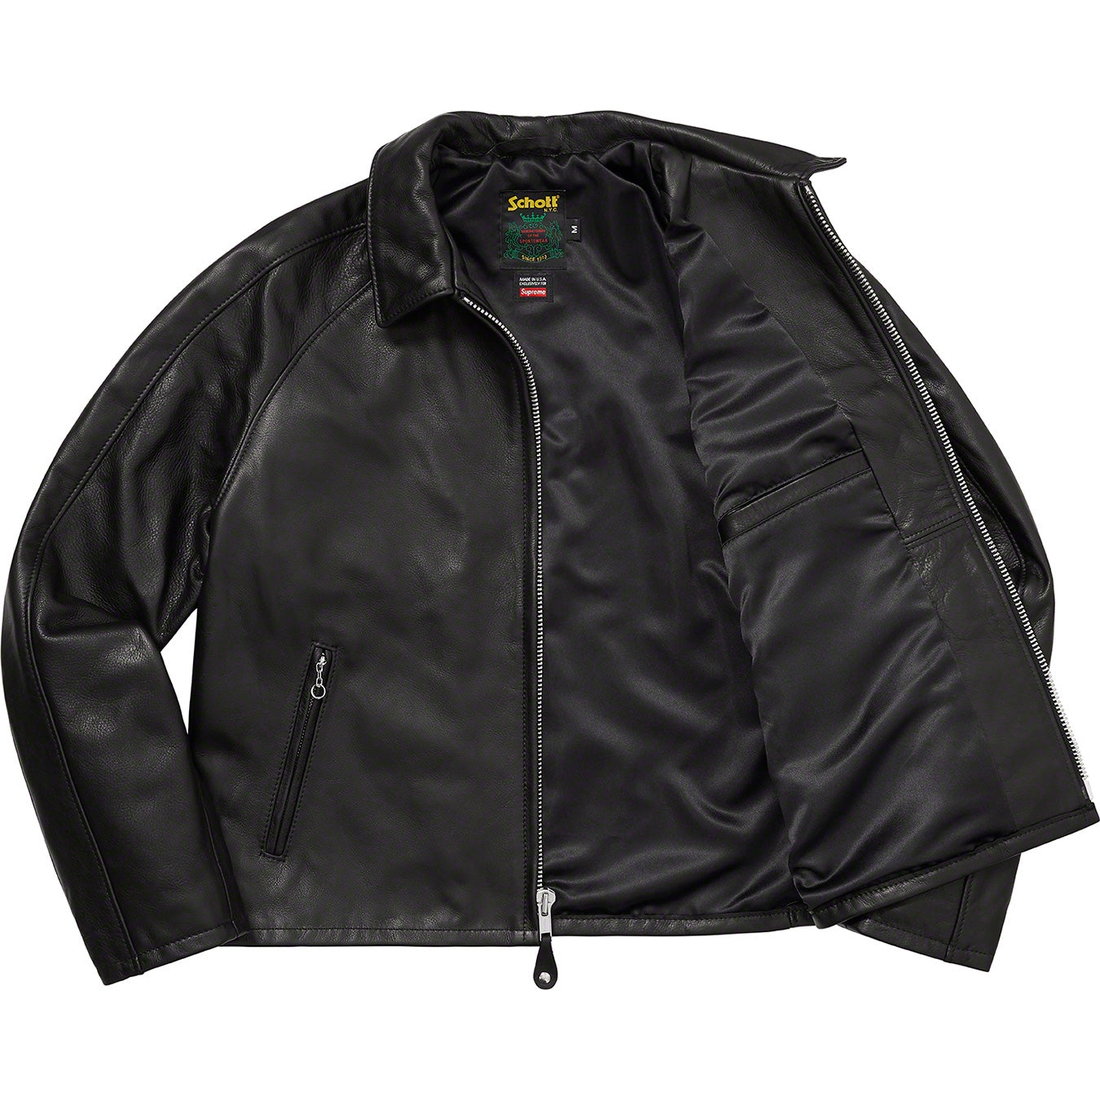 Details on Supreme Schott Leather Racer Jacket Black from spring summer 2023 (Price is $798)